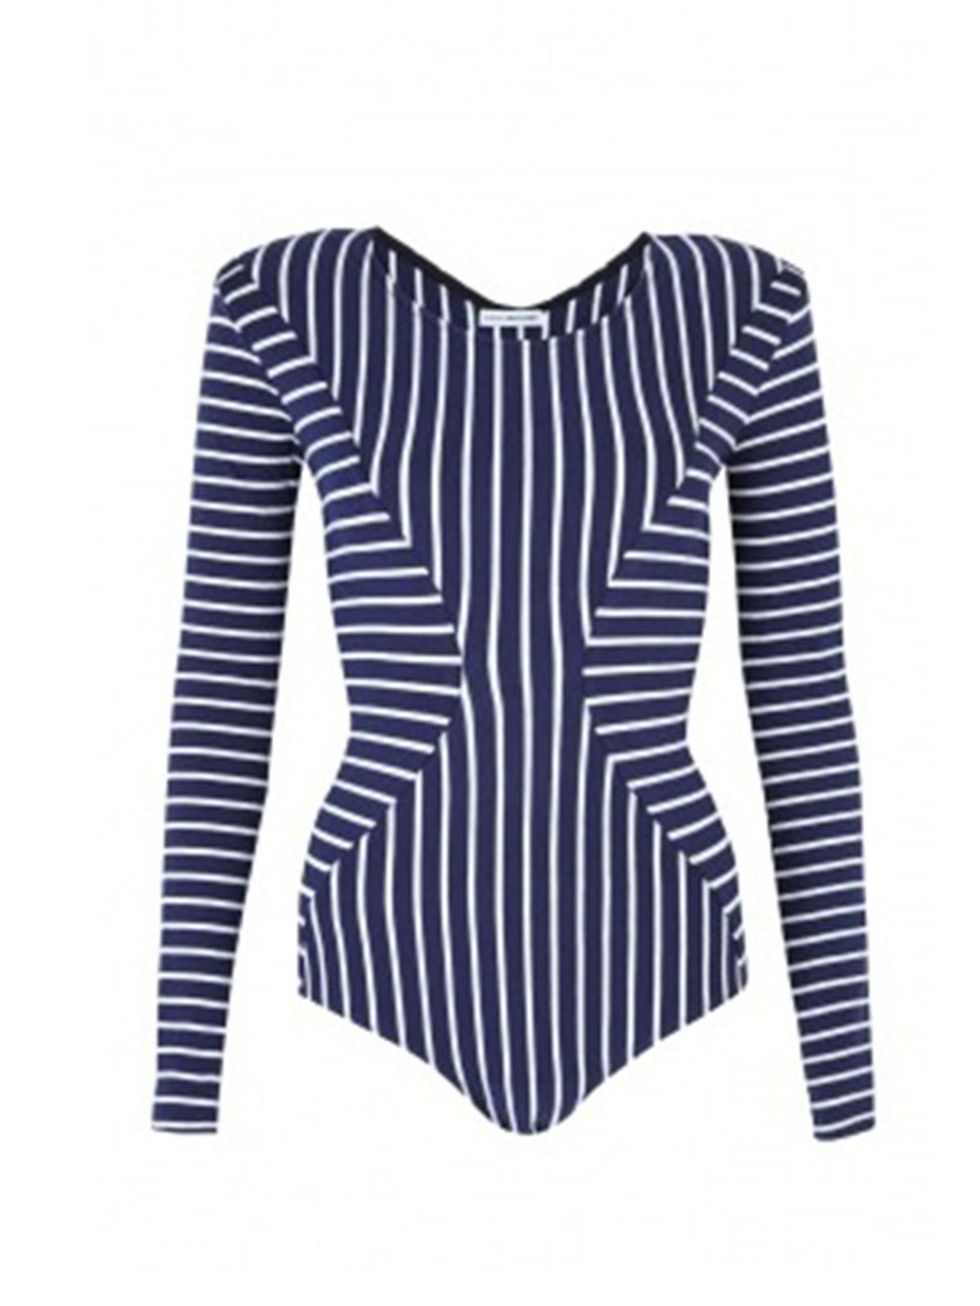 <p>Body Editions bodysuit, £200, <a href="http://www.my-wardrobe.com/body-editions/breton-navy-stripe-body-suit-742425">my-wardrobe.com</a> </p>